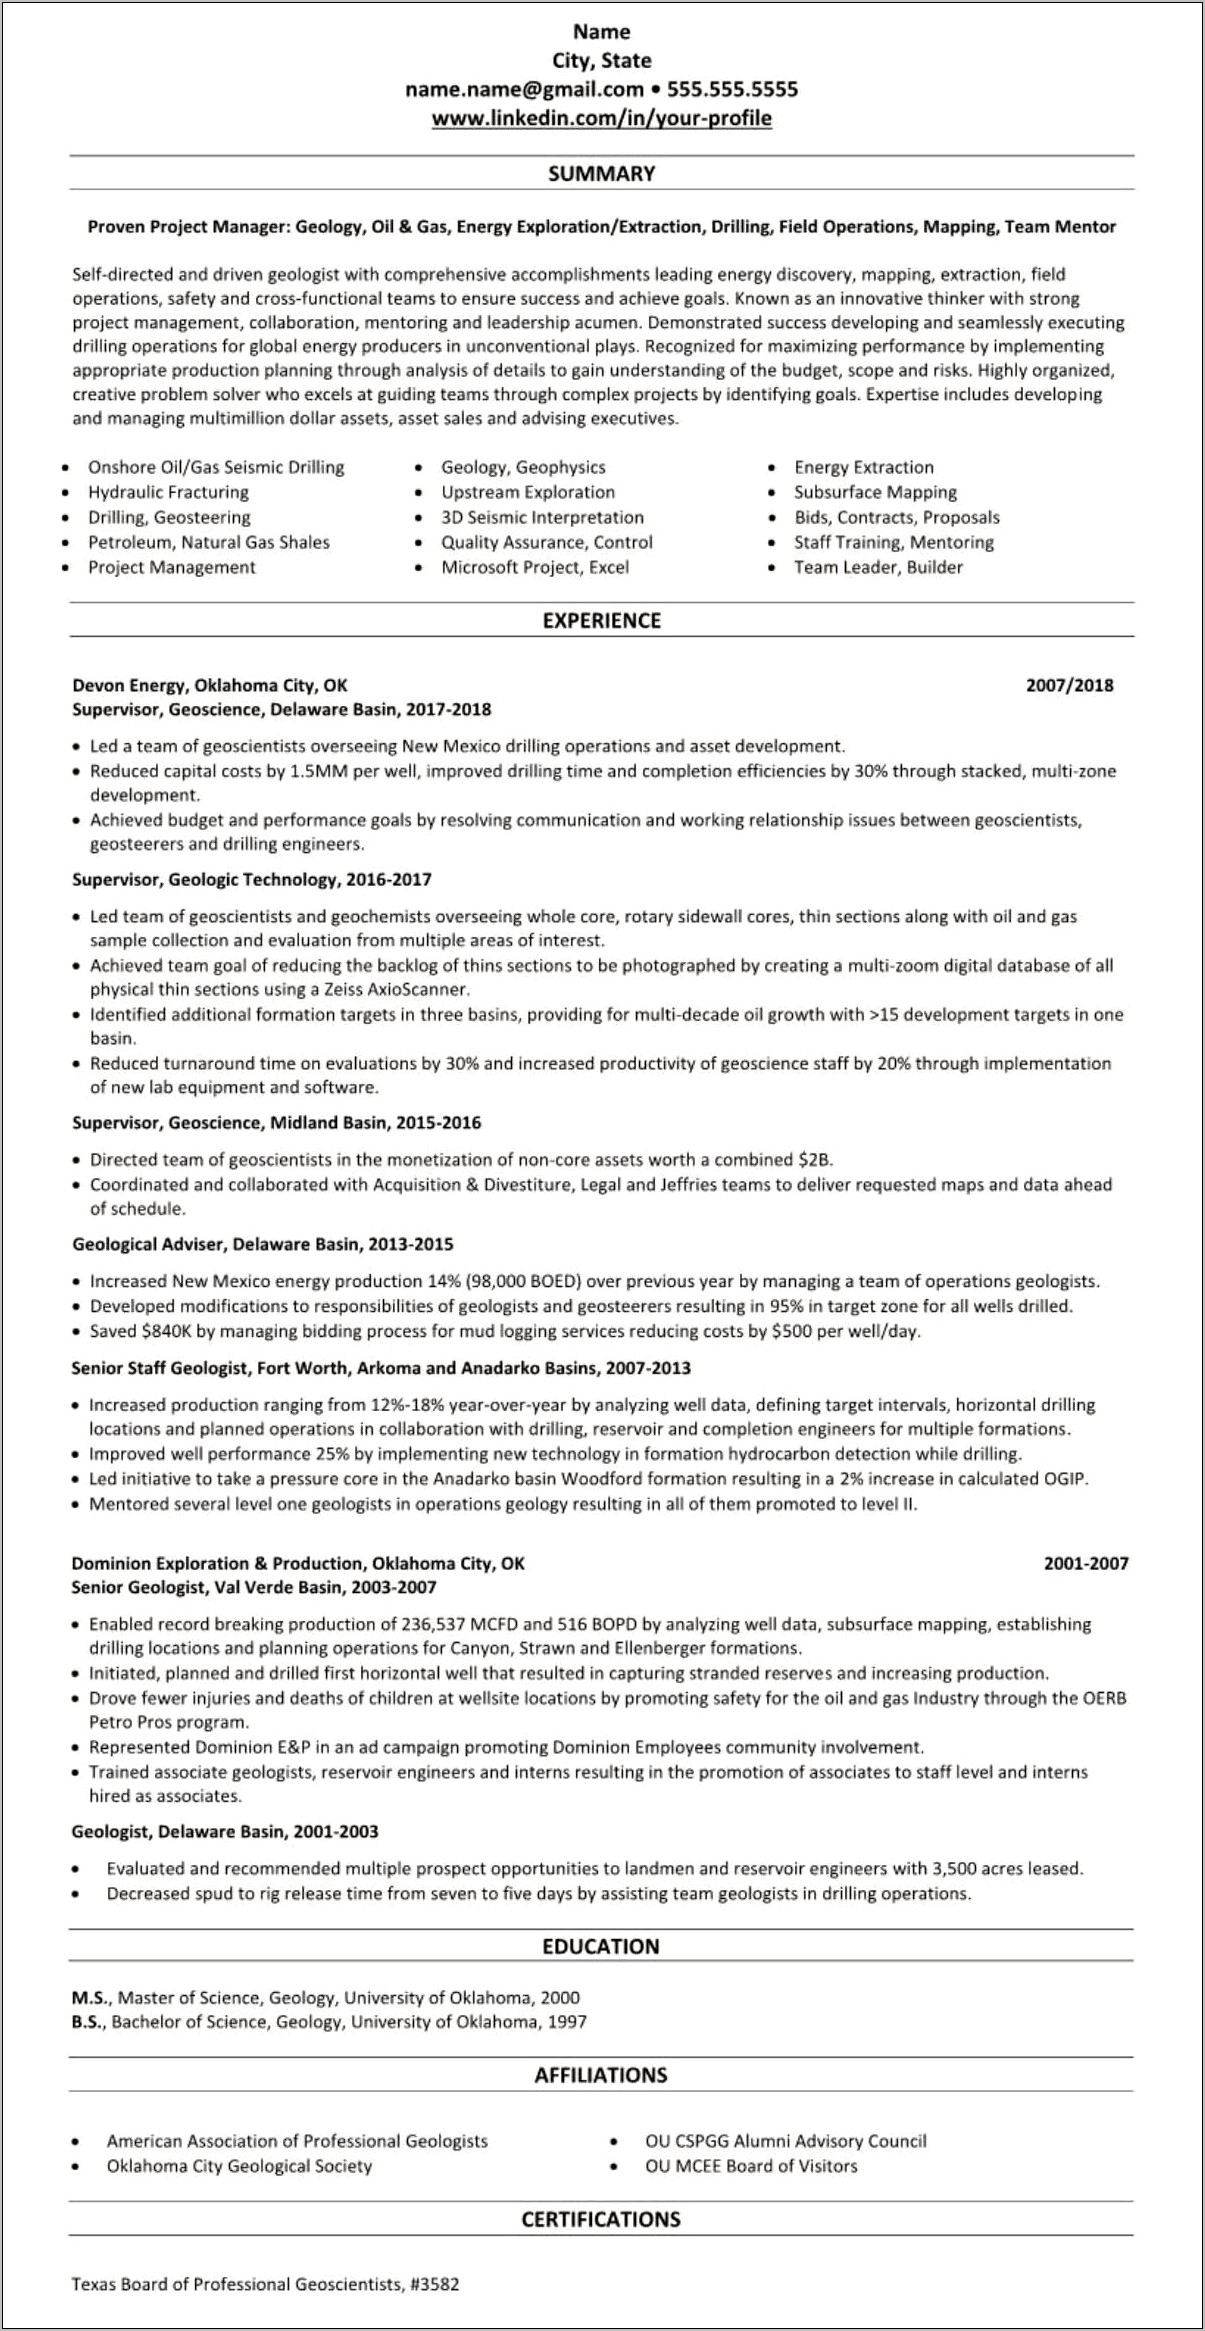 Sample Resume For Petroleum Engineering